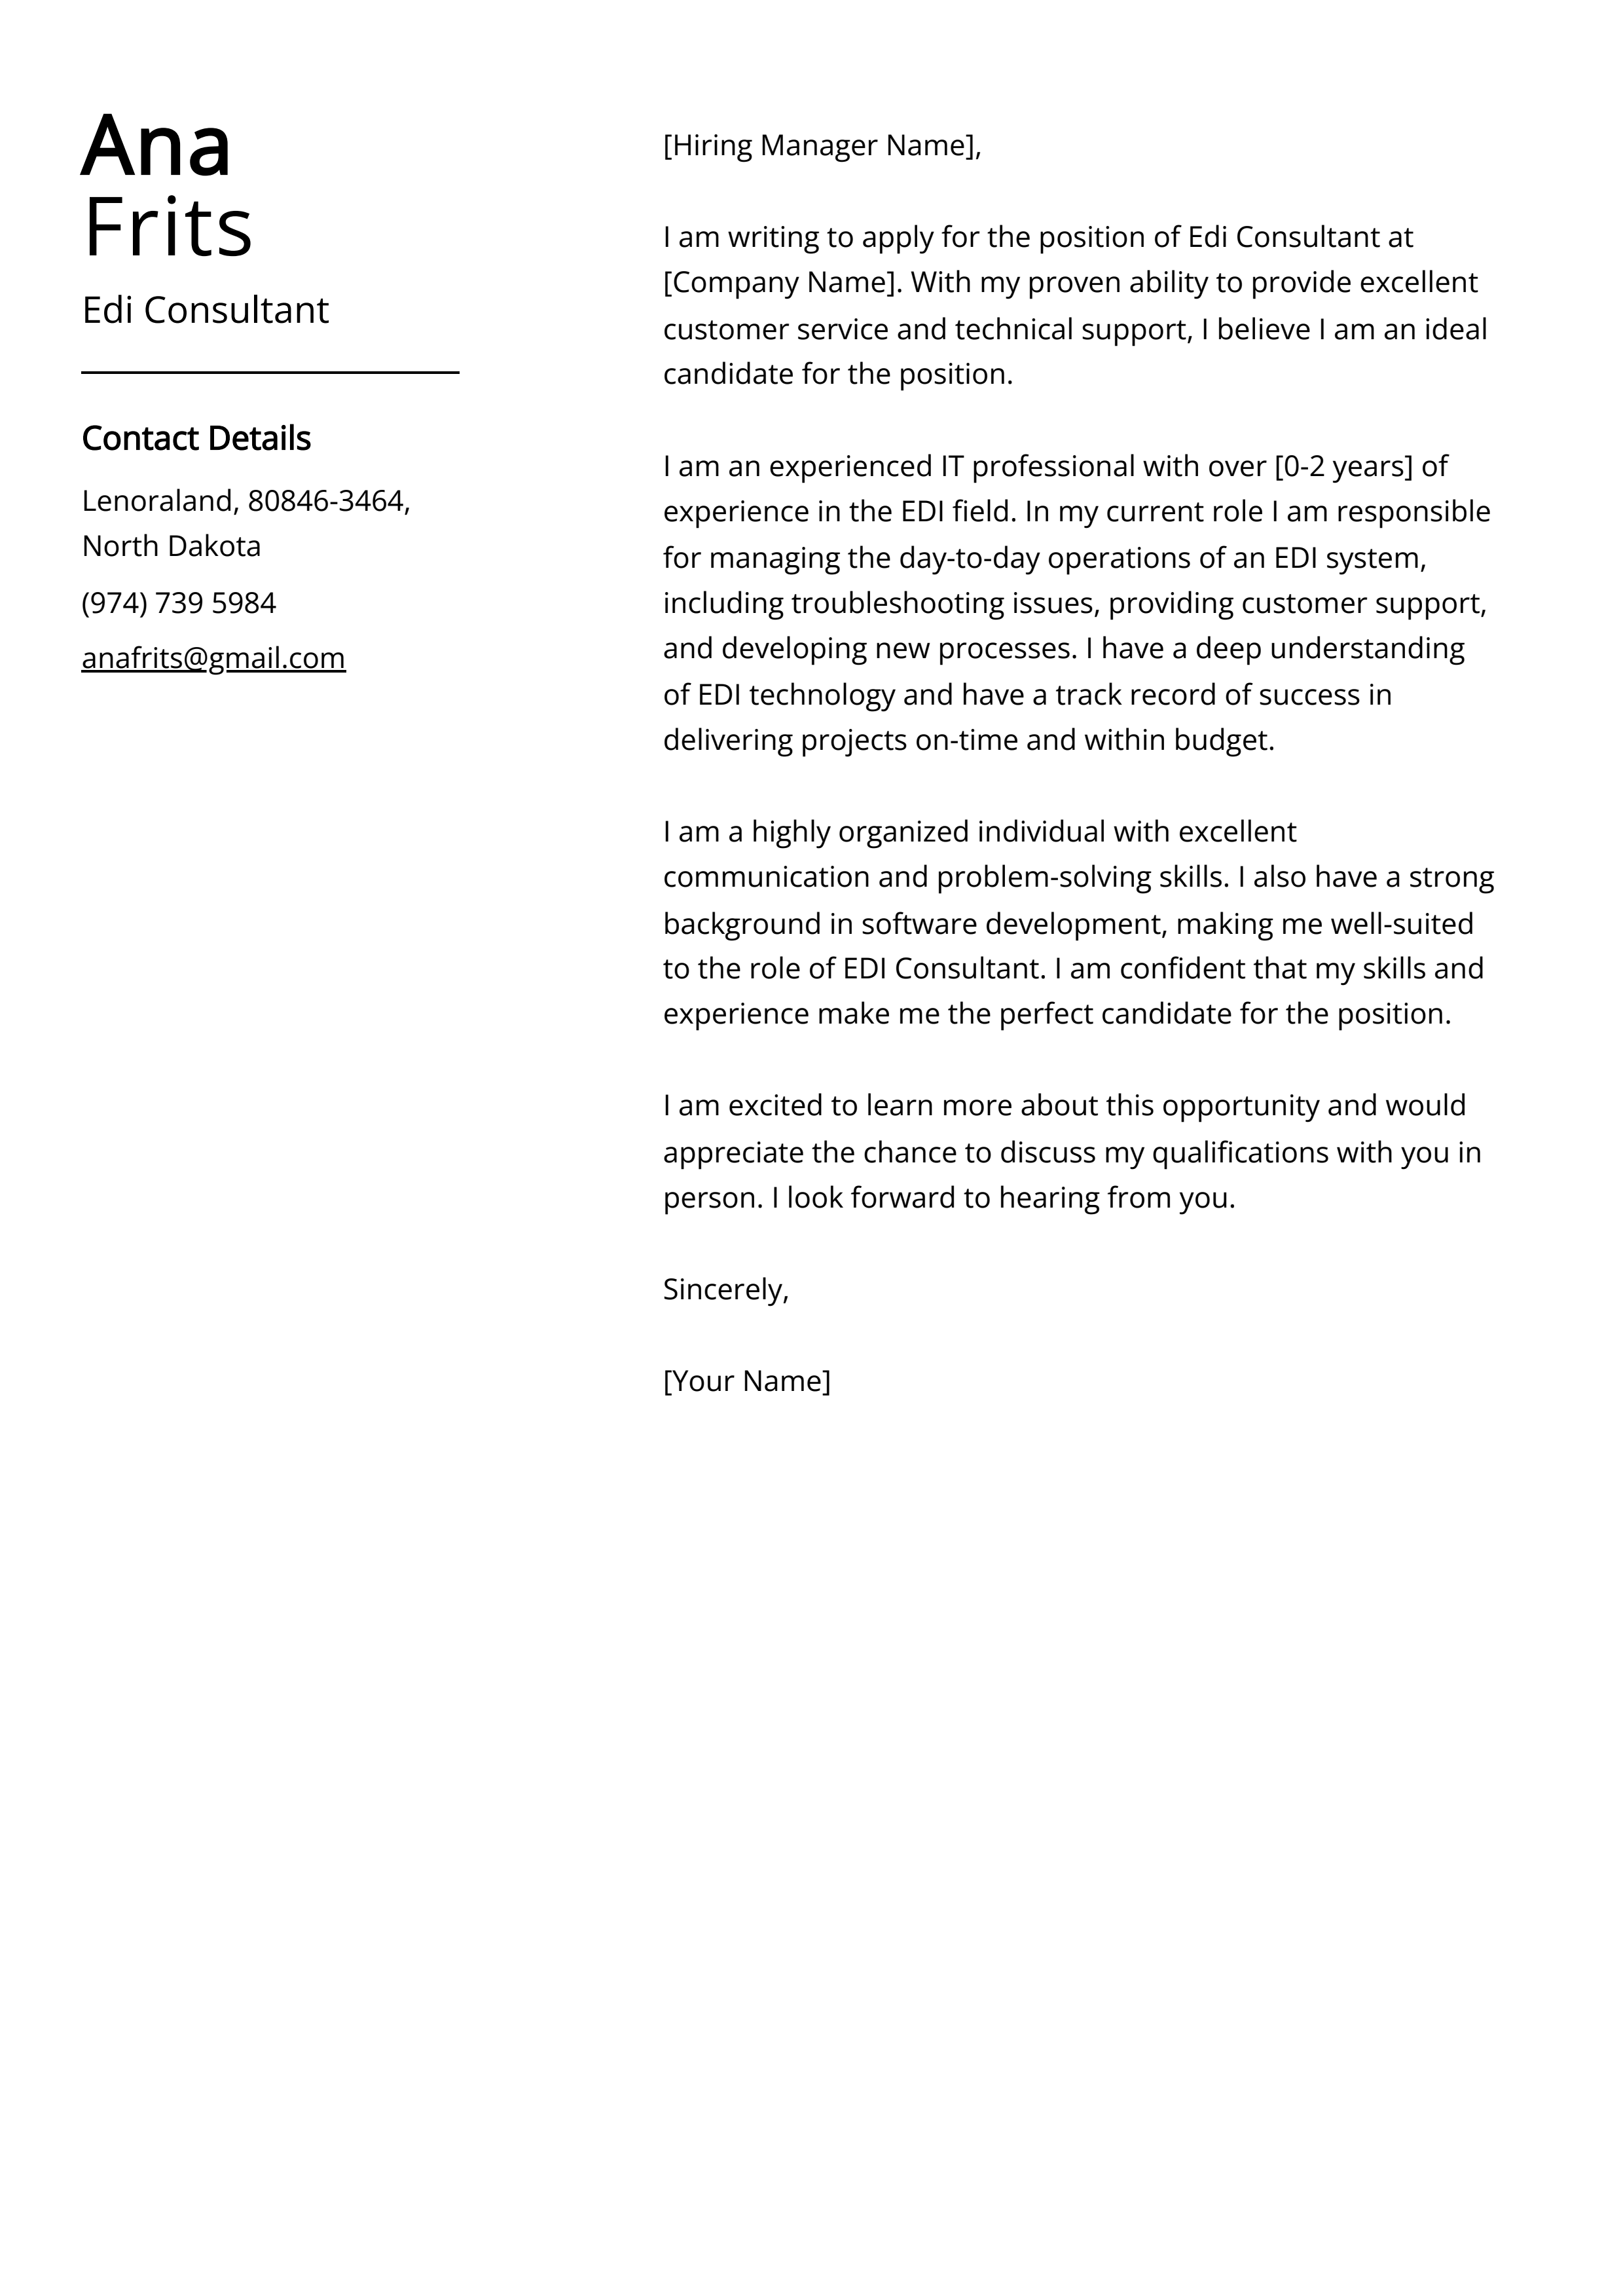 Edi Consultant Cover Letter Example